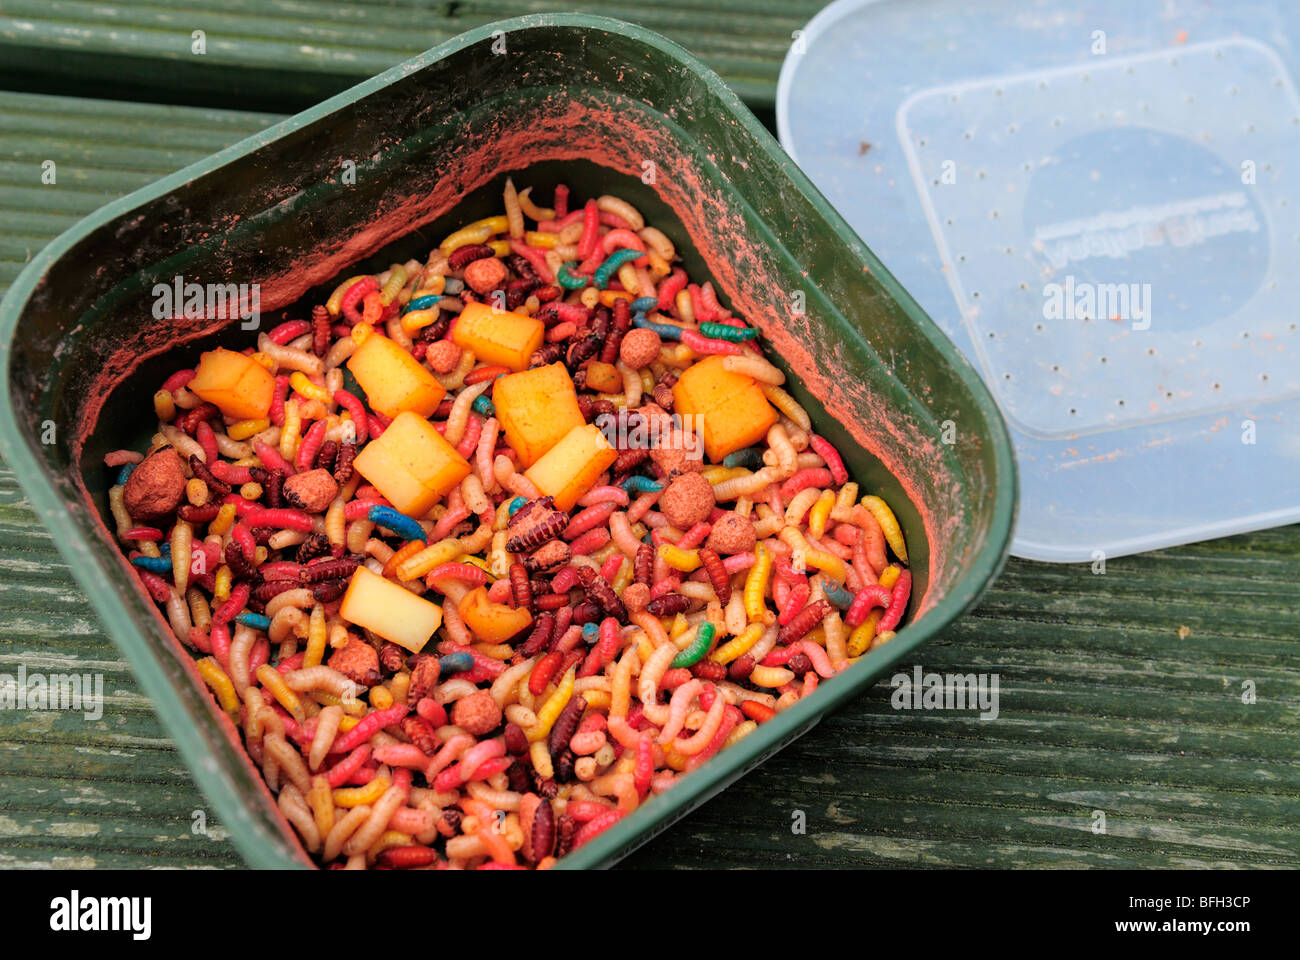 Tub of Maggots for Fishing Bait Stock Photo